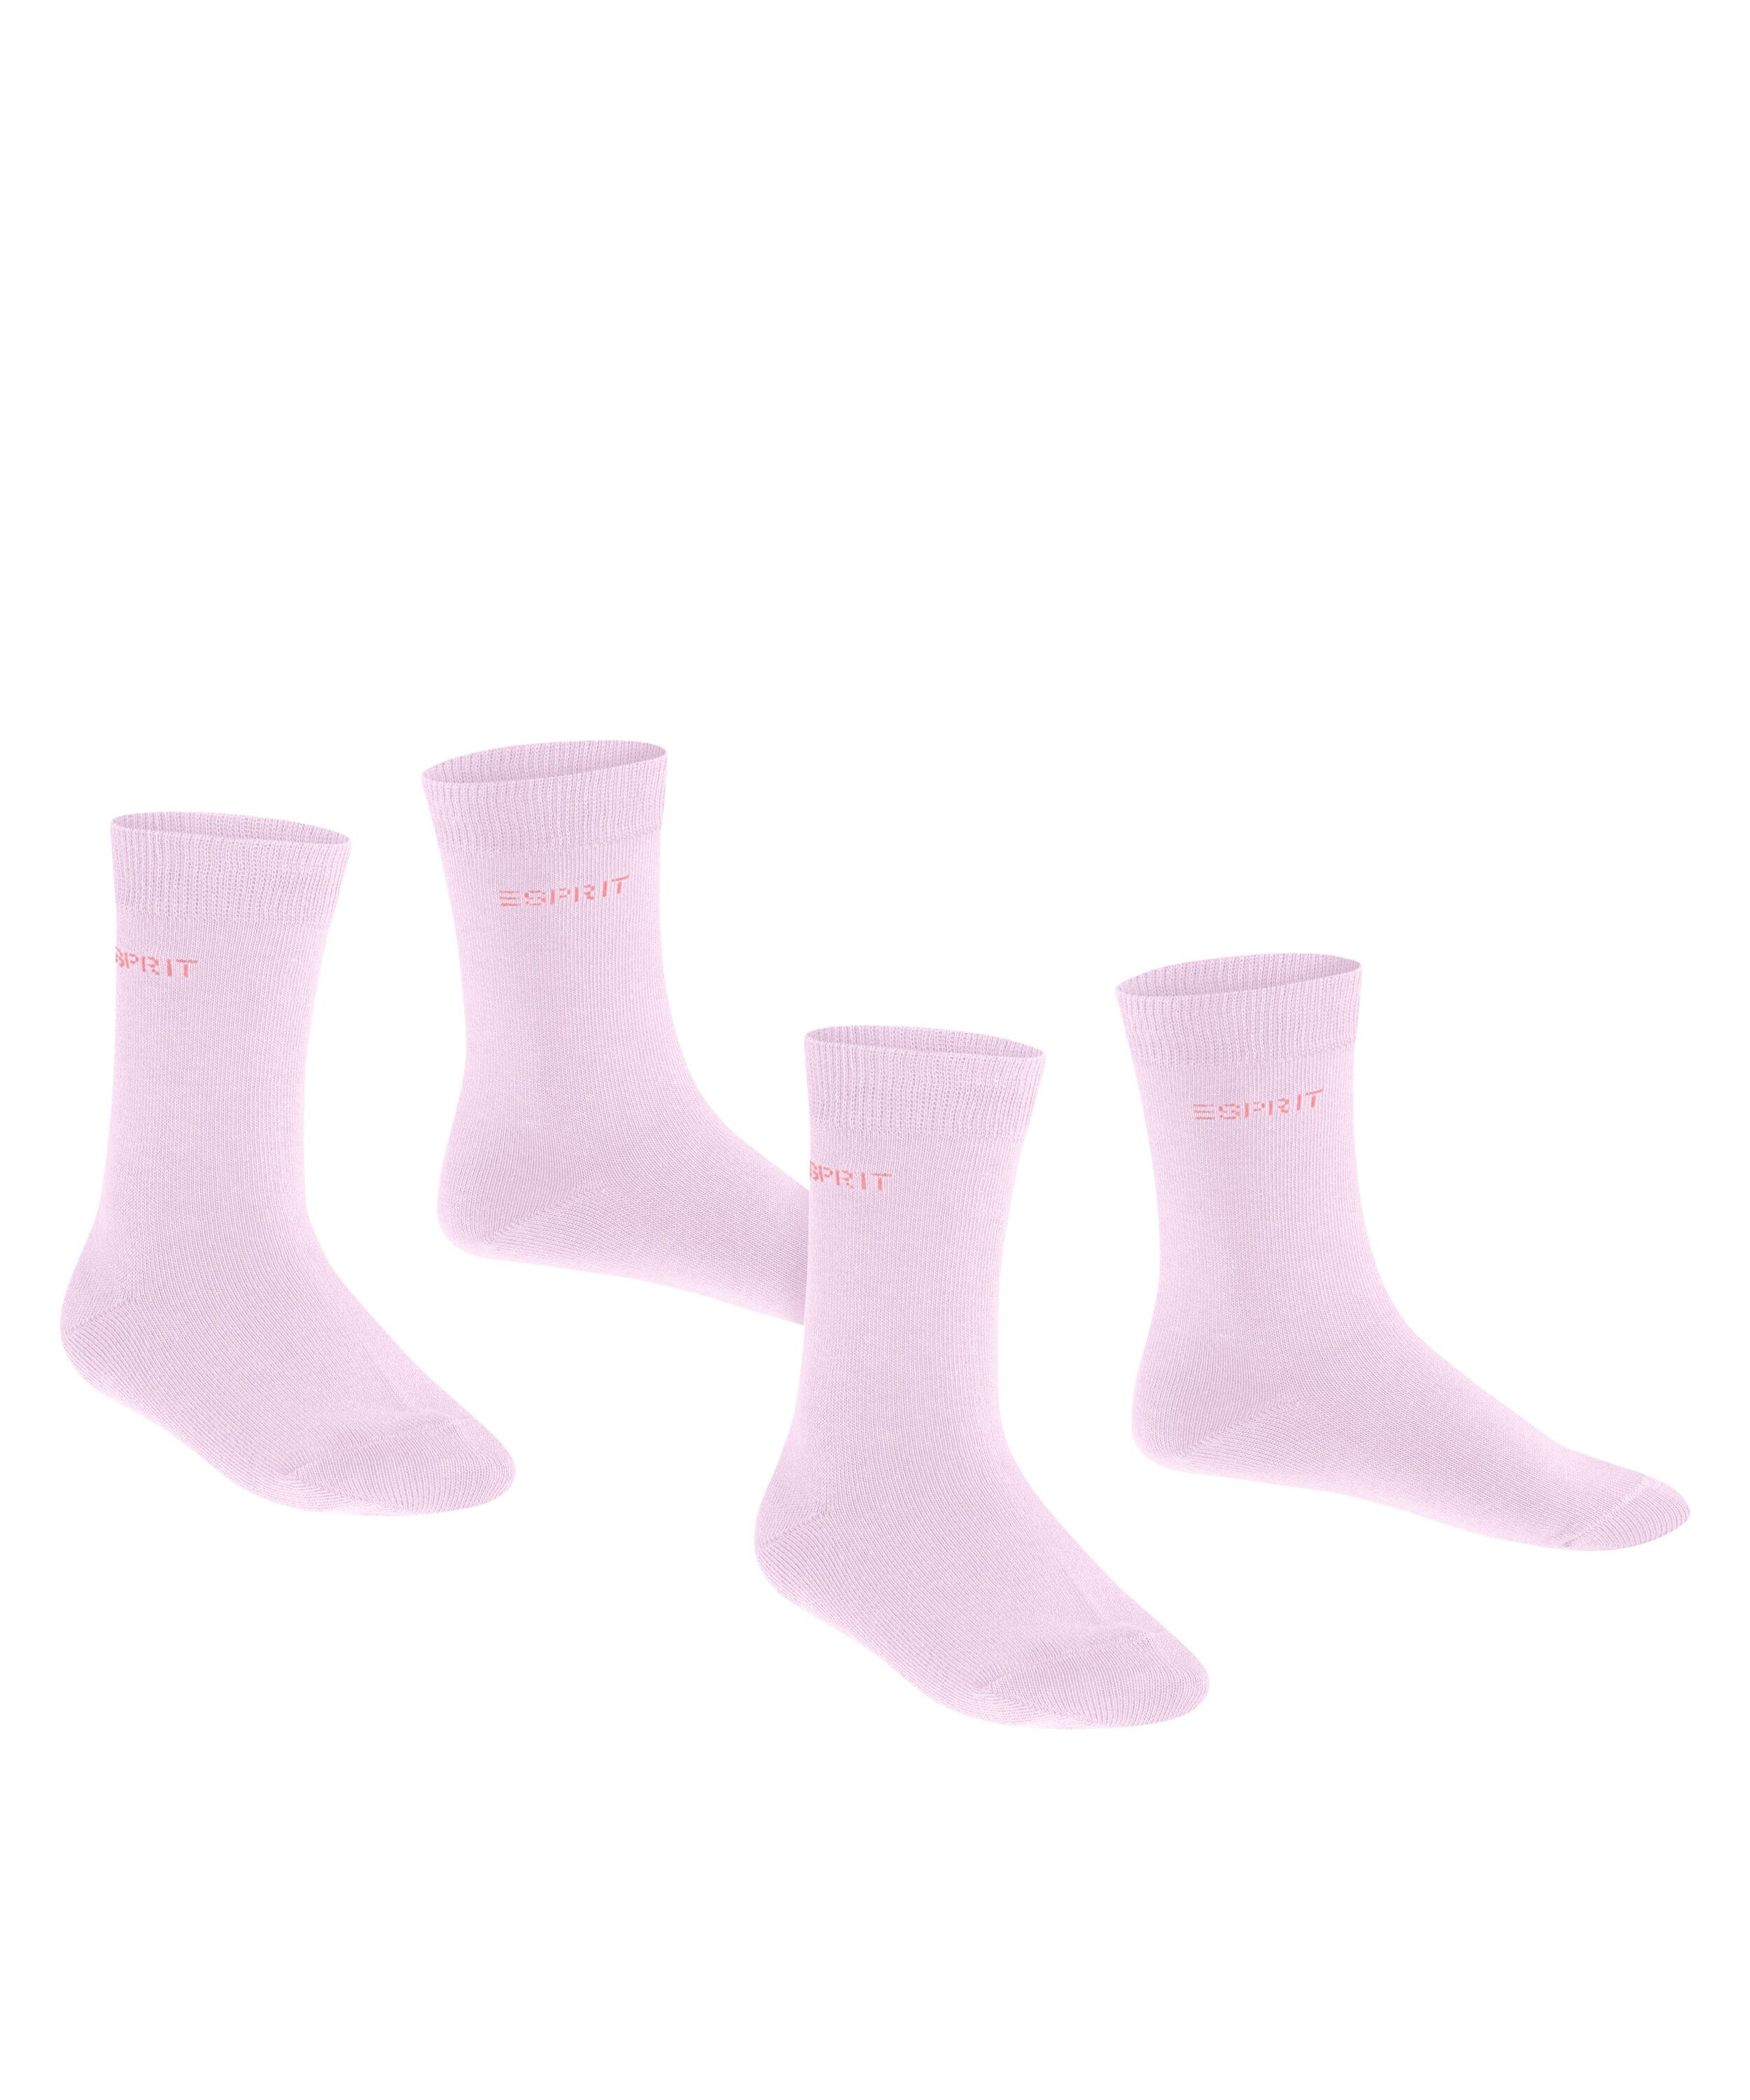 Esprit Socken Foot Logo (8738) (2-Paar) 2-Pack rose